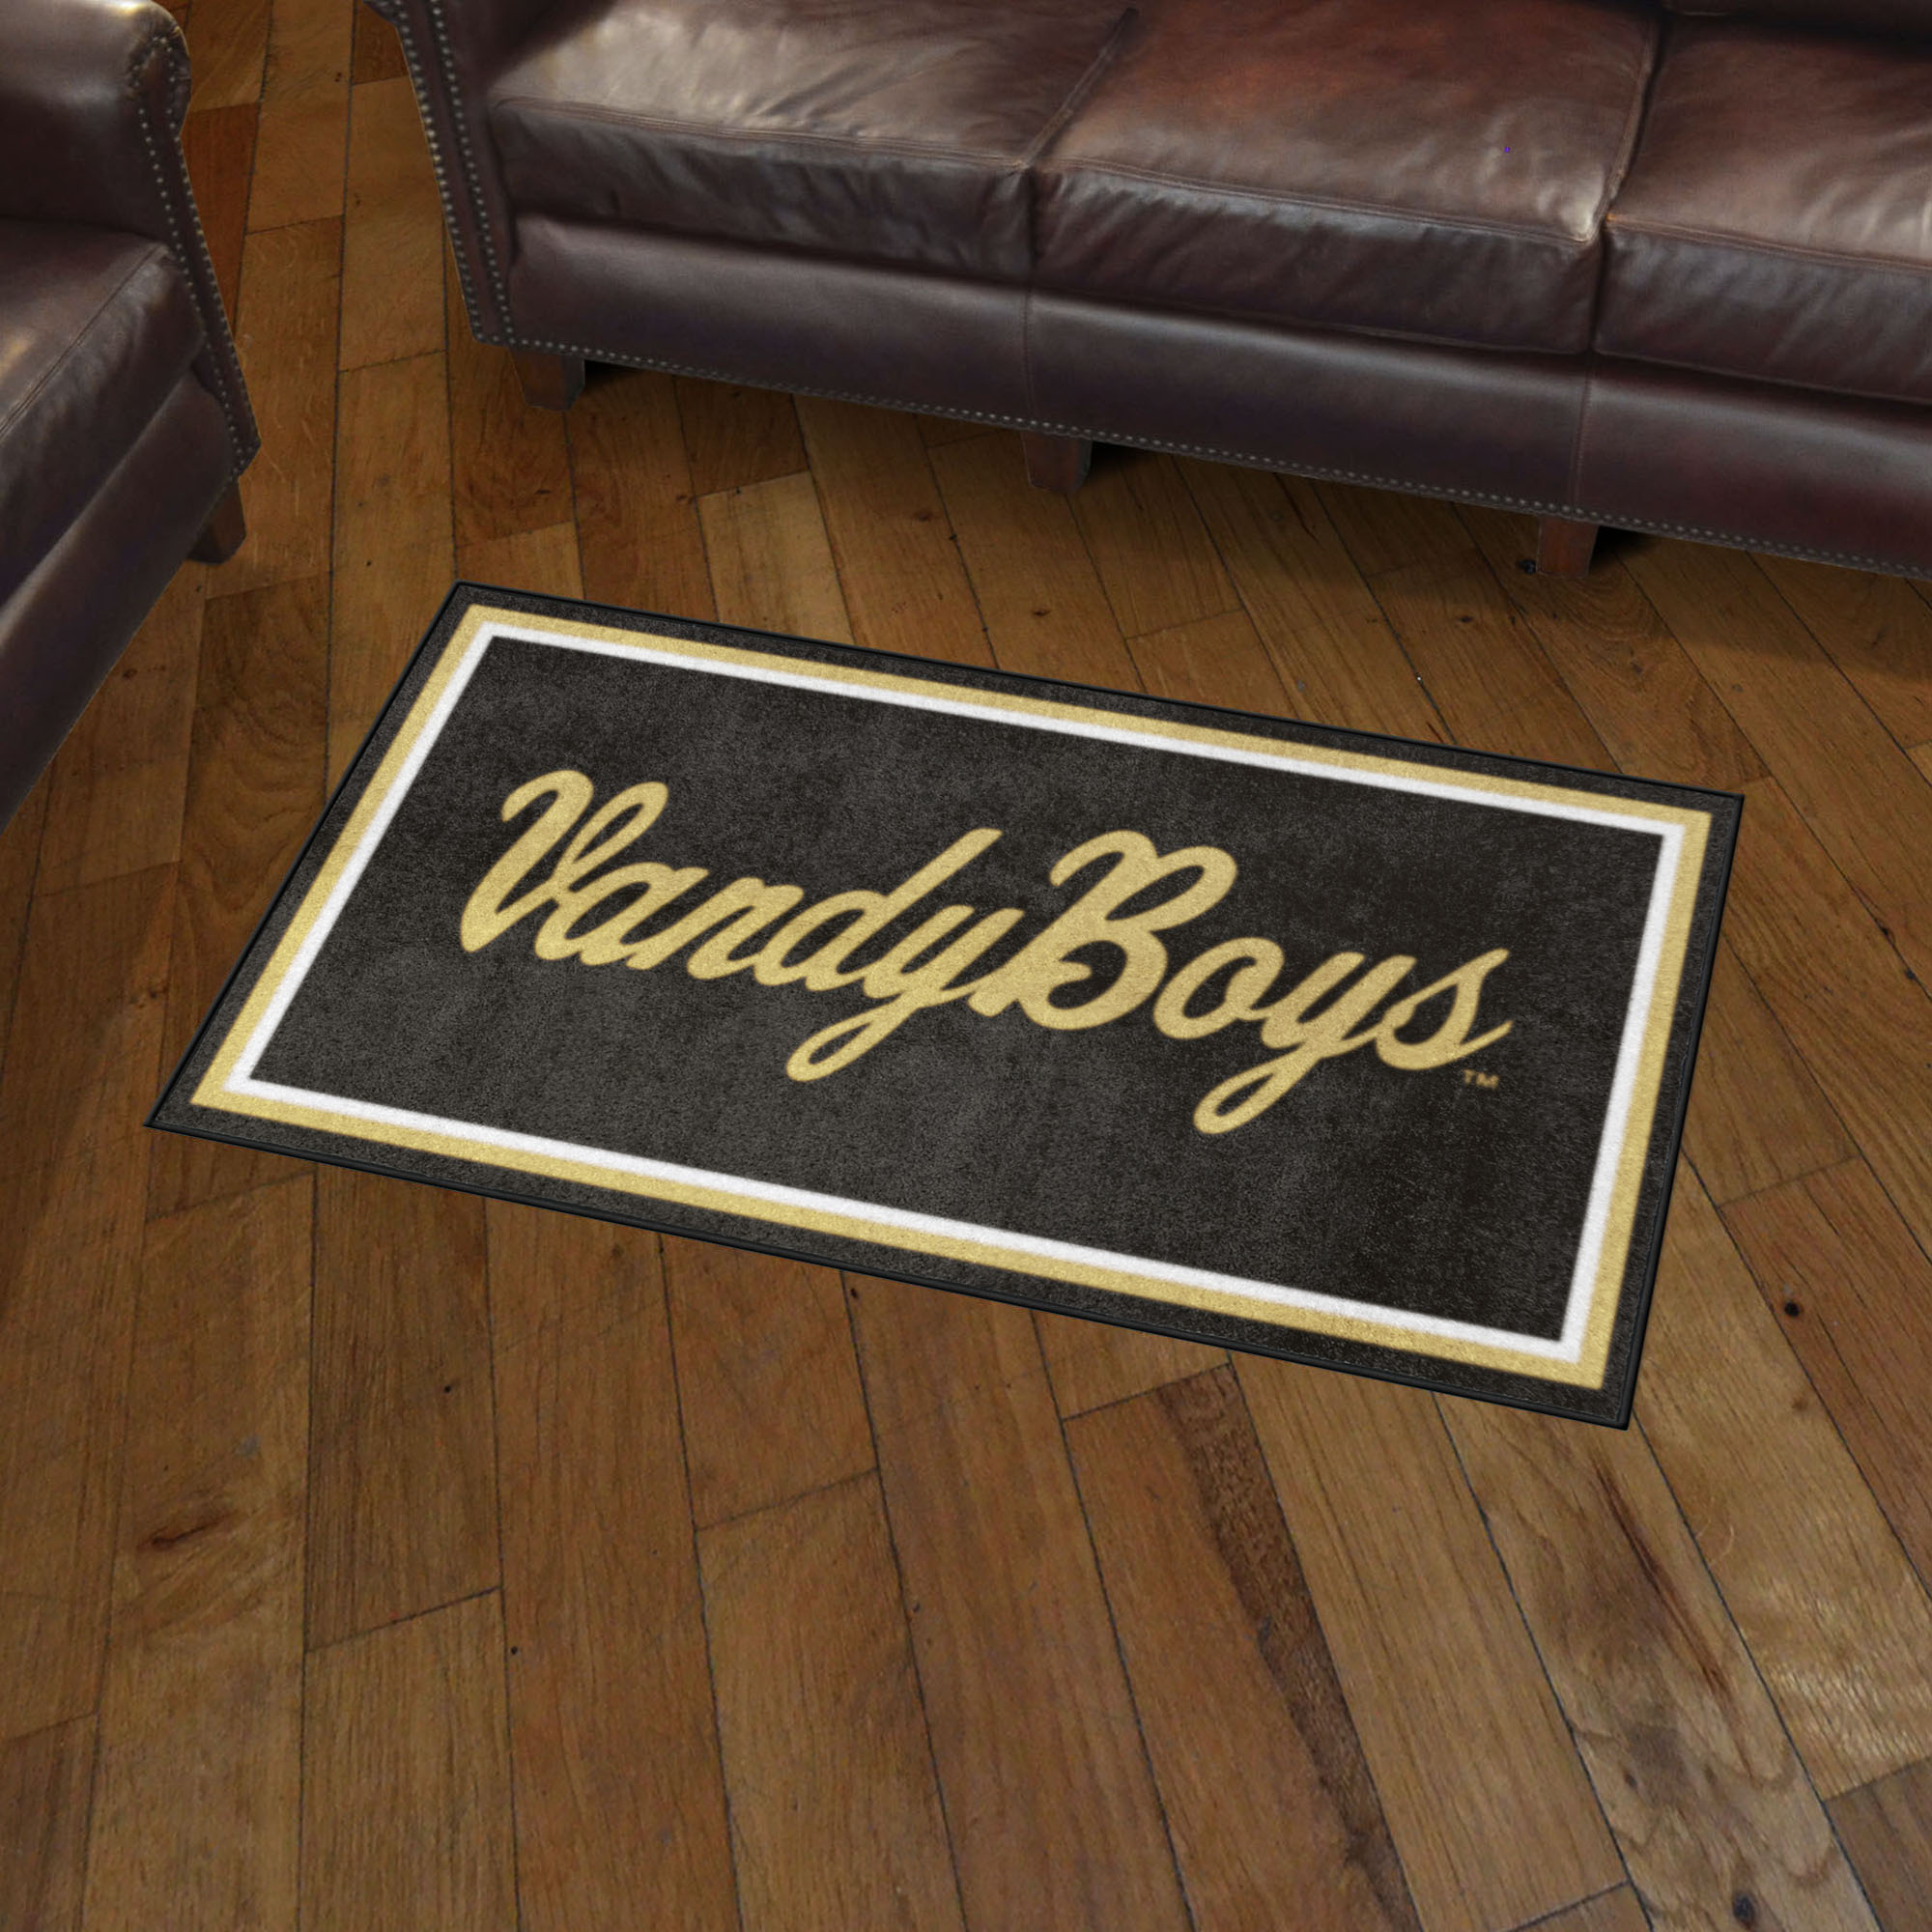 Vandy Boys Commodores Area Rug - 3' x 5' Mascot Nylon